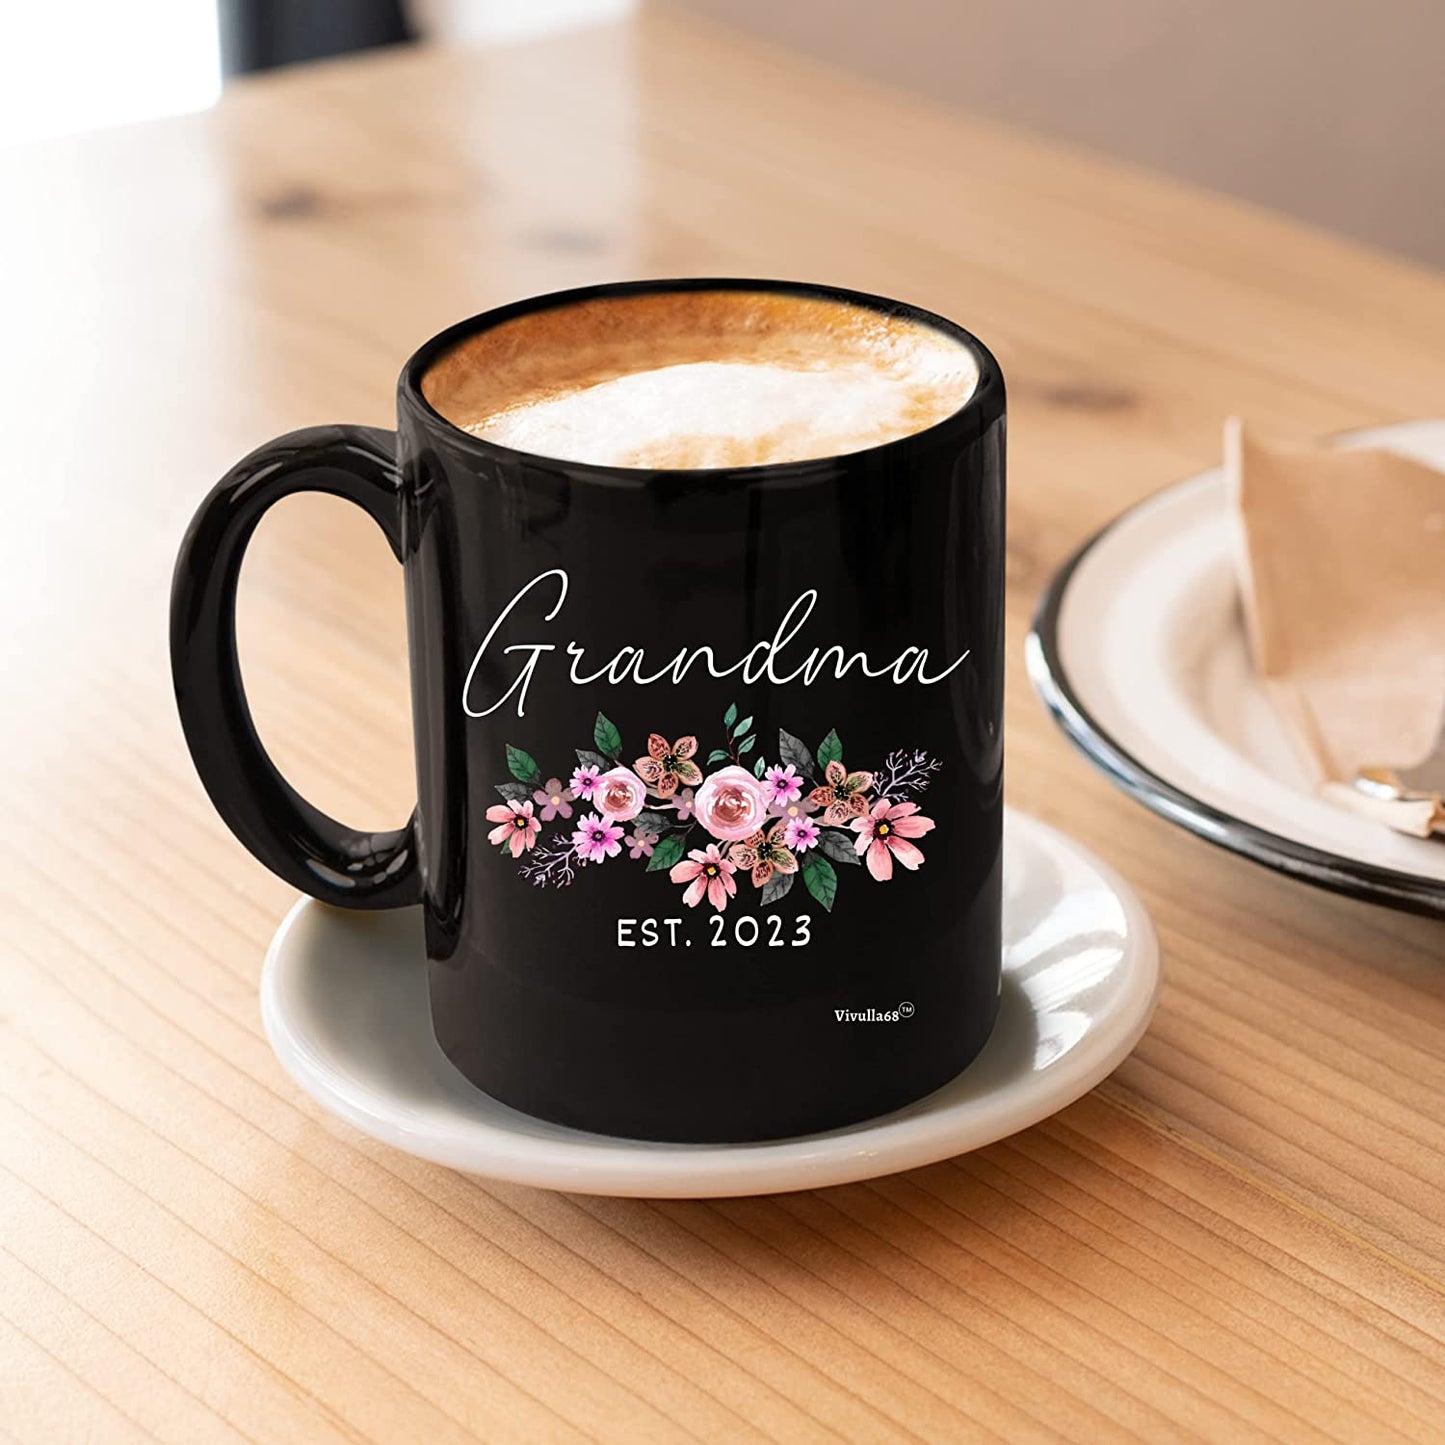 Vivulla68 Pregnancy Announcement For Grandparents Mug Set, Promoted To Grandparents Grandma And Grandpa 2023 Mugs, Grandma And Grandpa Announcement Gifts, Grandparents Baby Announcement Gifts (Black)